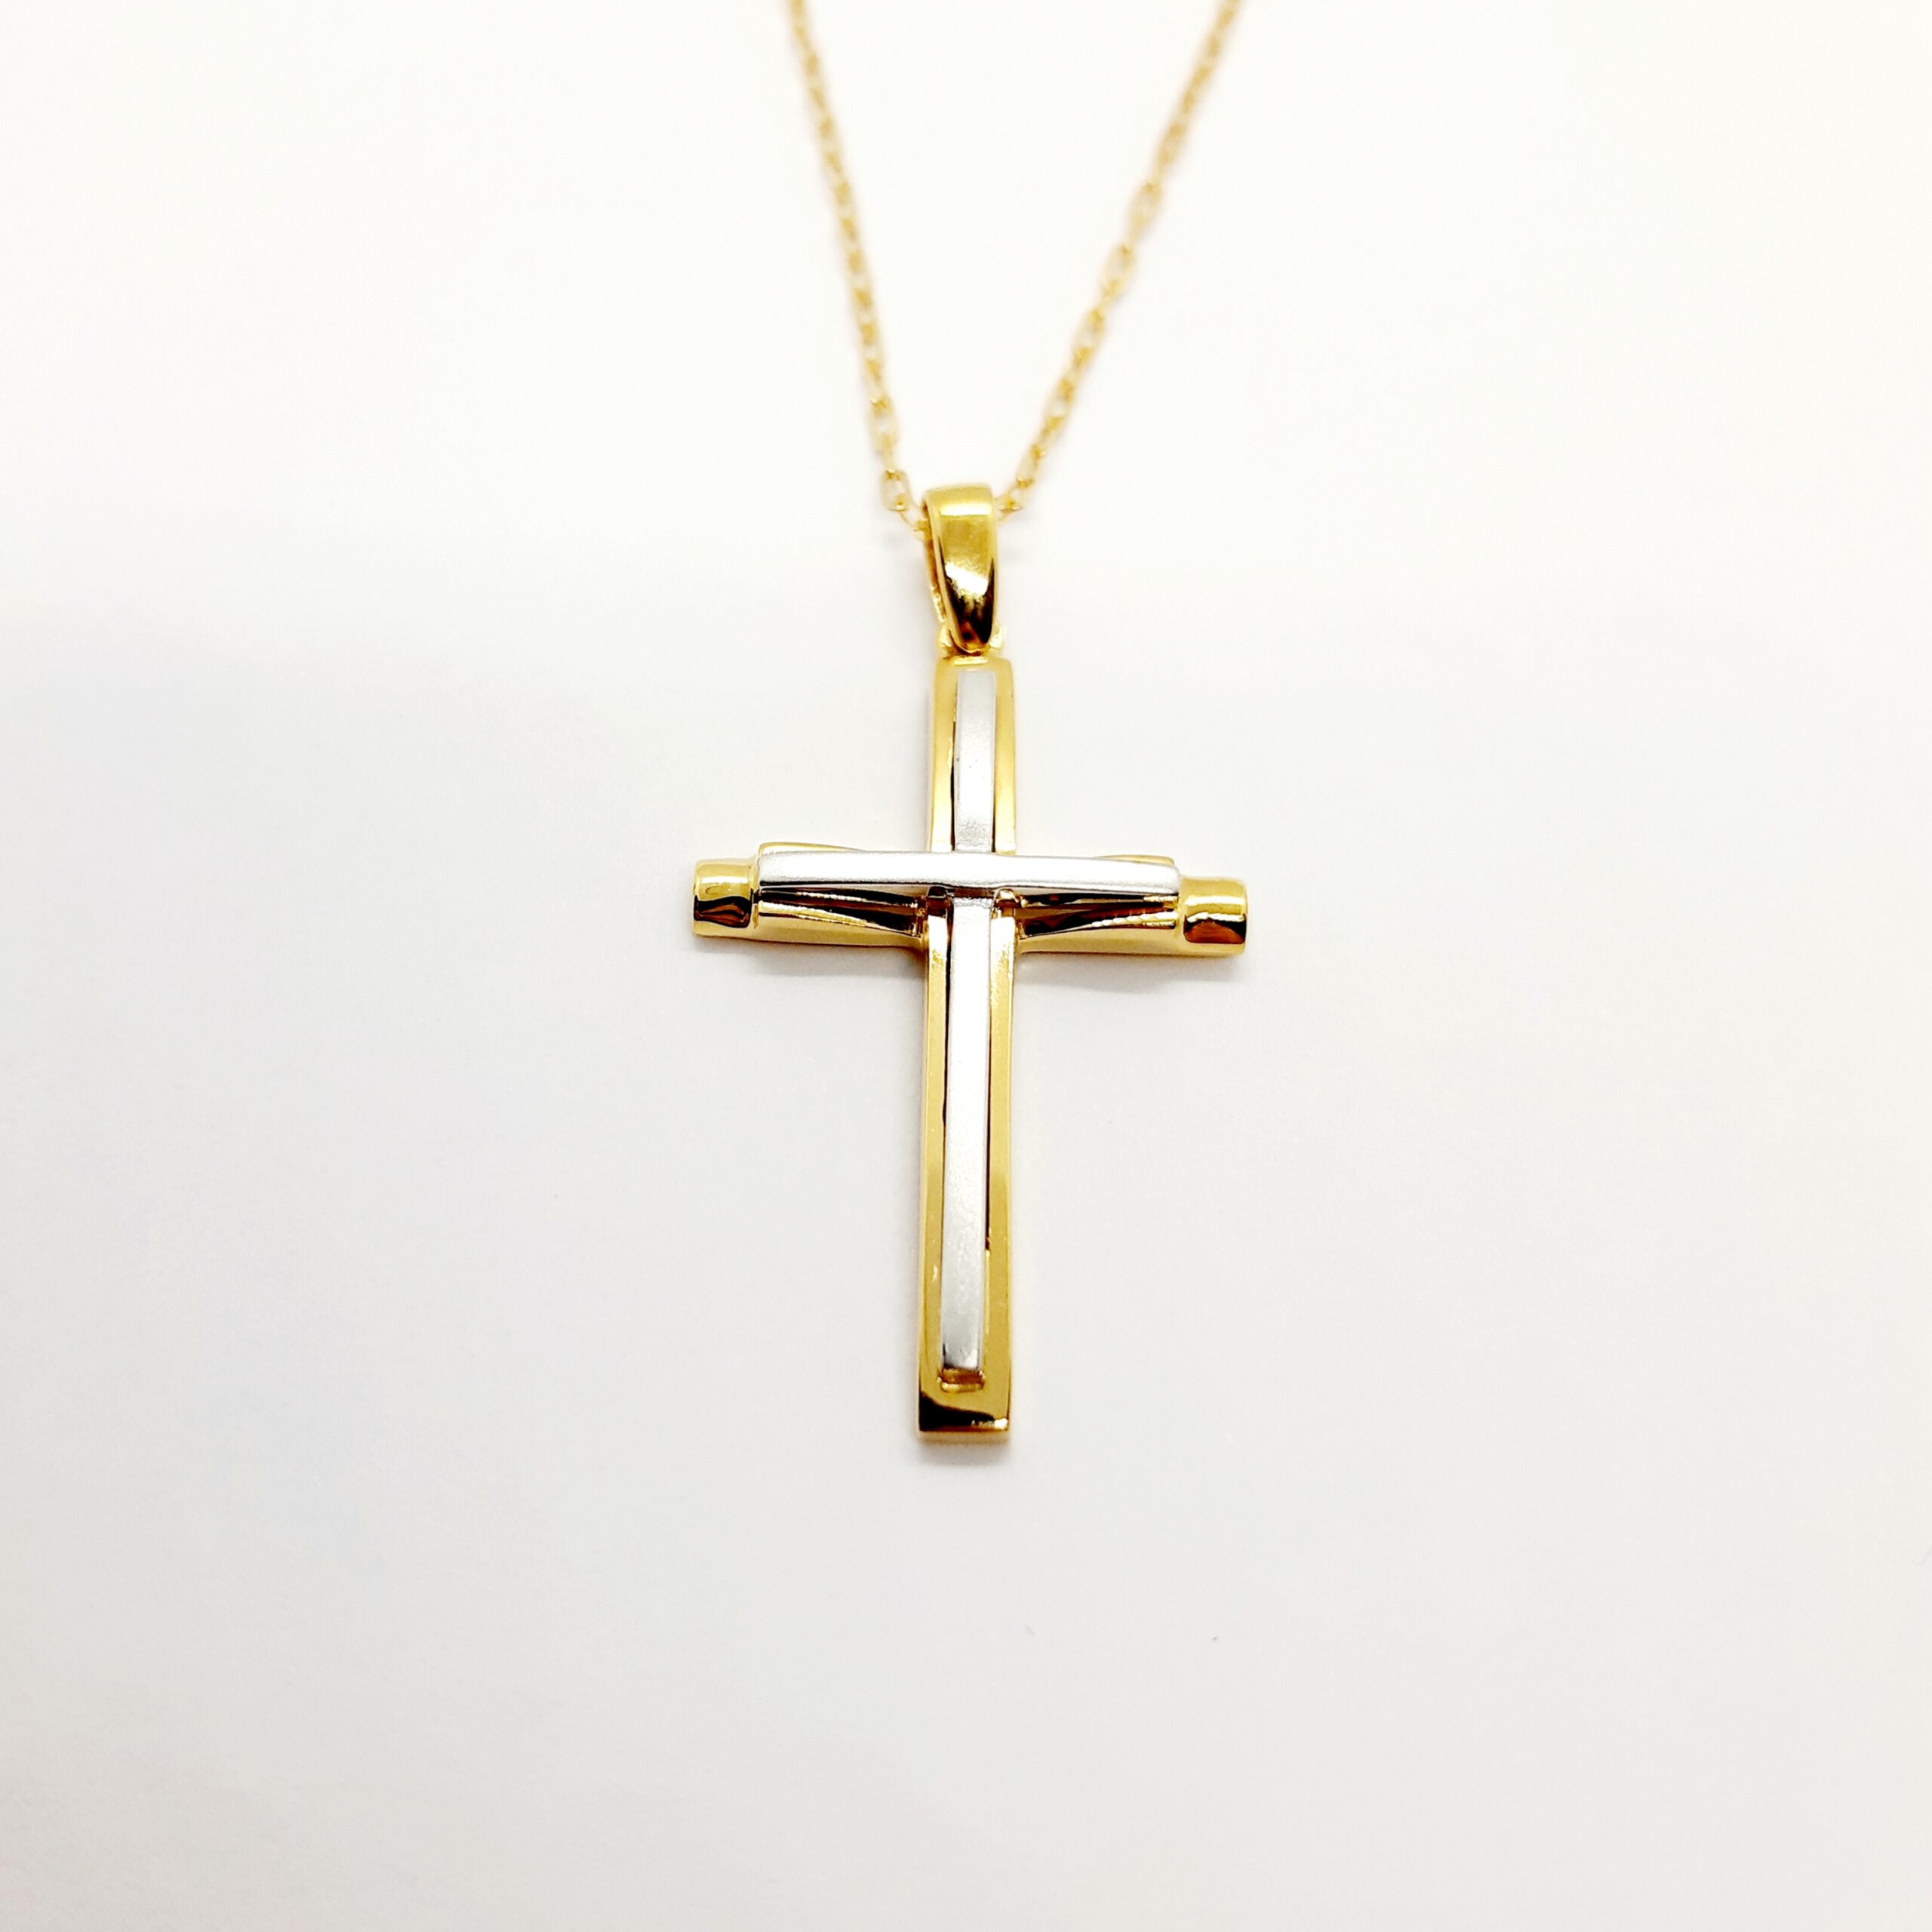 Cross Necklace: Initials by Megu's Attic